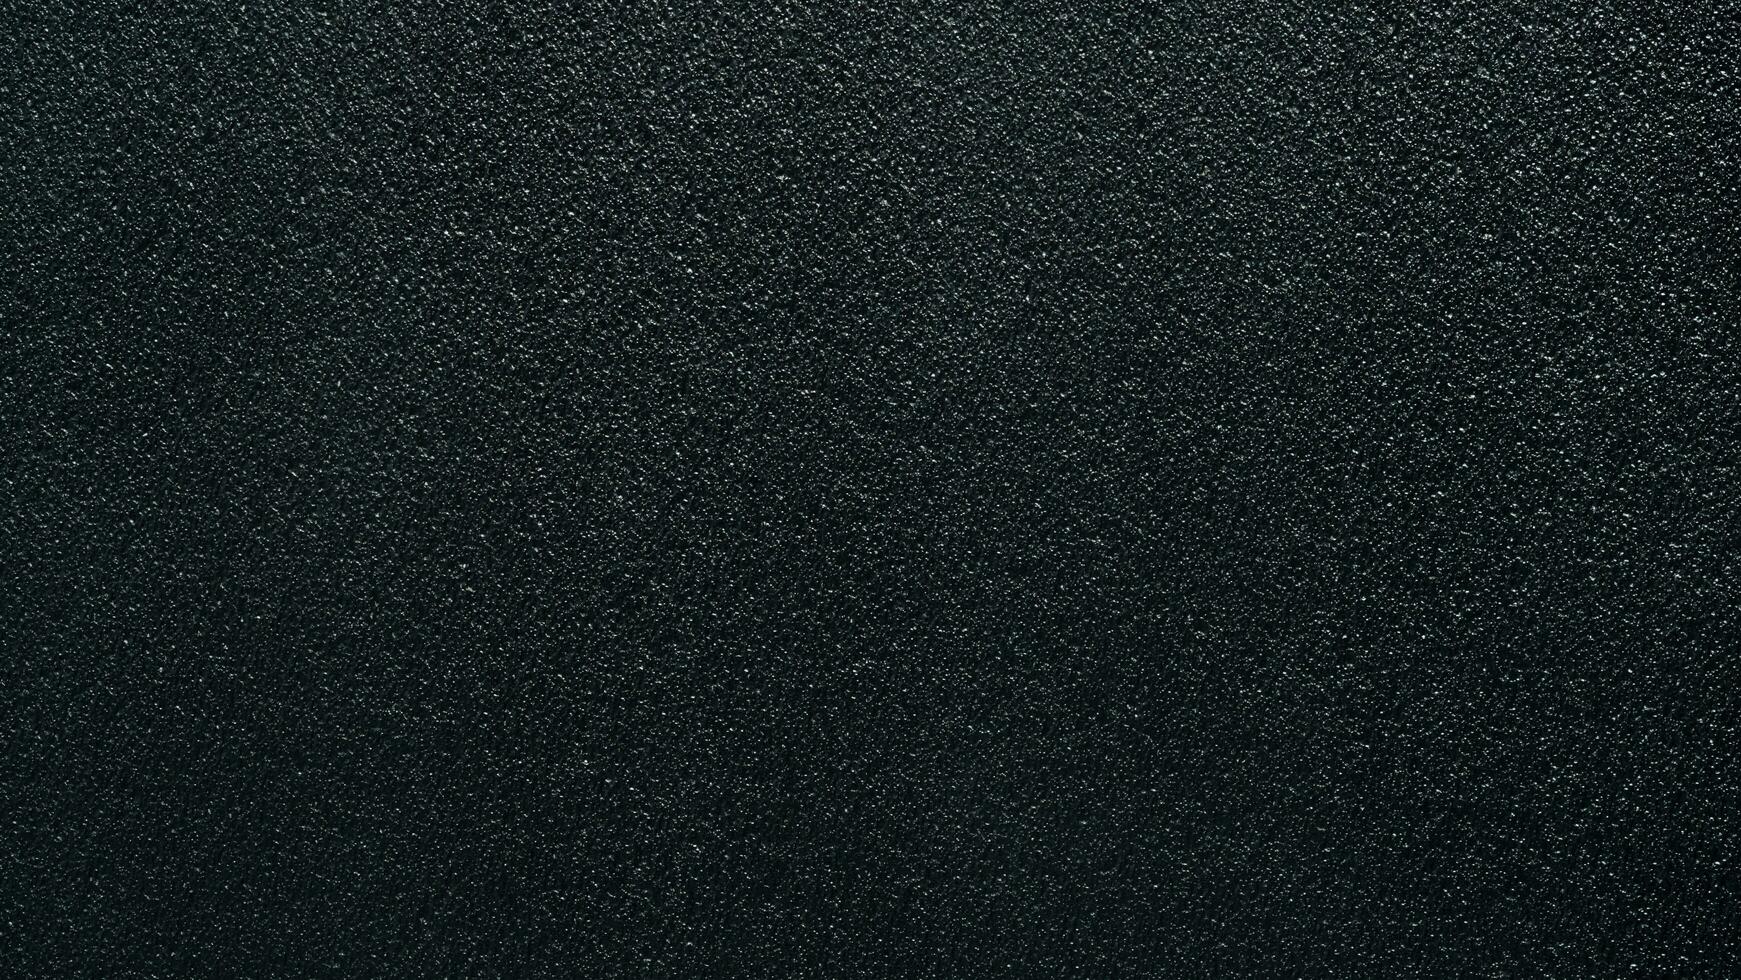 Seamless surface of black sponge foam as background, ethylene vinyl acetate sheet, sandpaper-like fine texture. photo